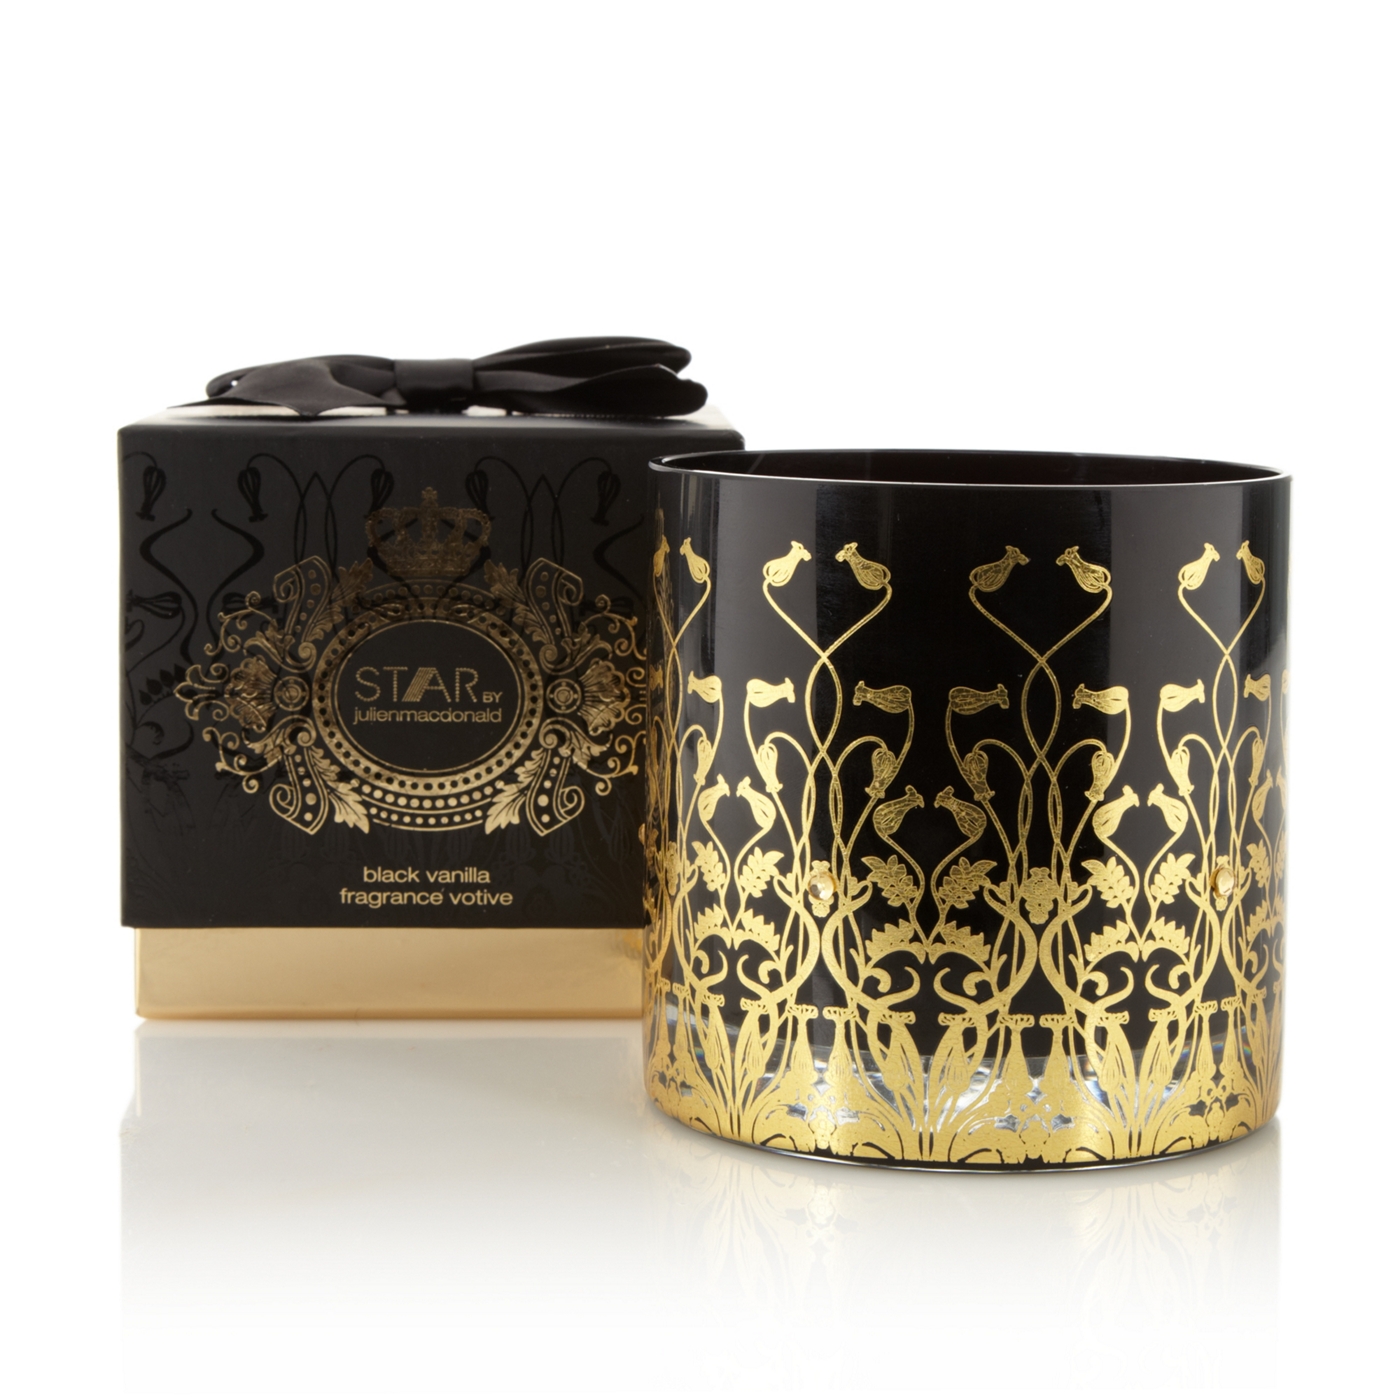 Star by Julien Macdonald Designer black vanilla scented candle